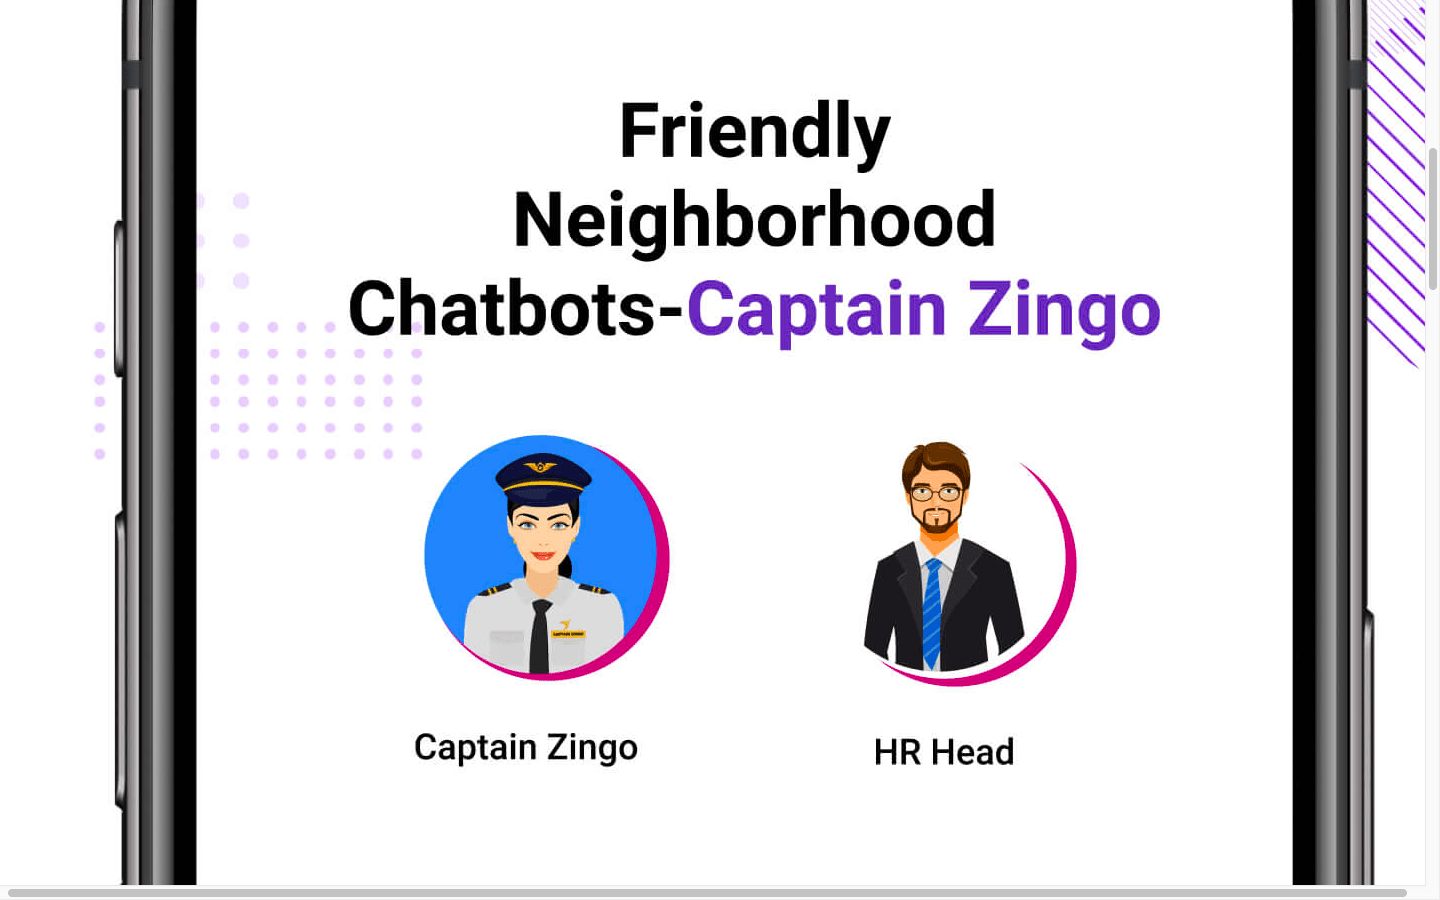 Friendly Neighborhood Chatbots-Captain Zingo